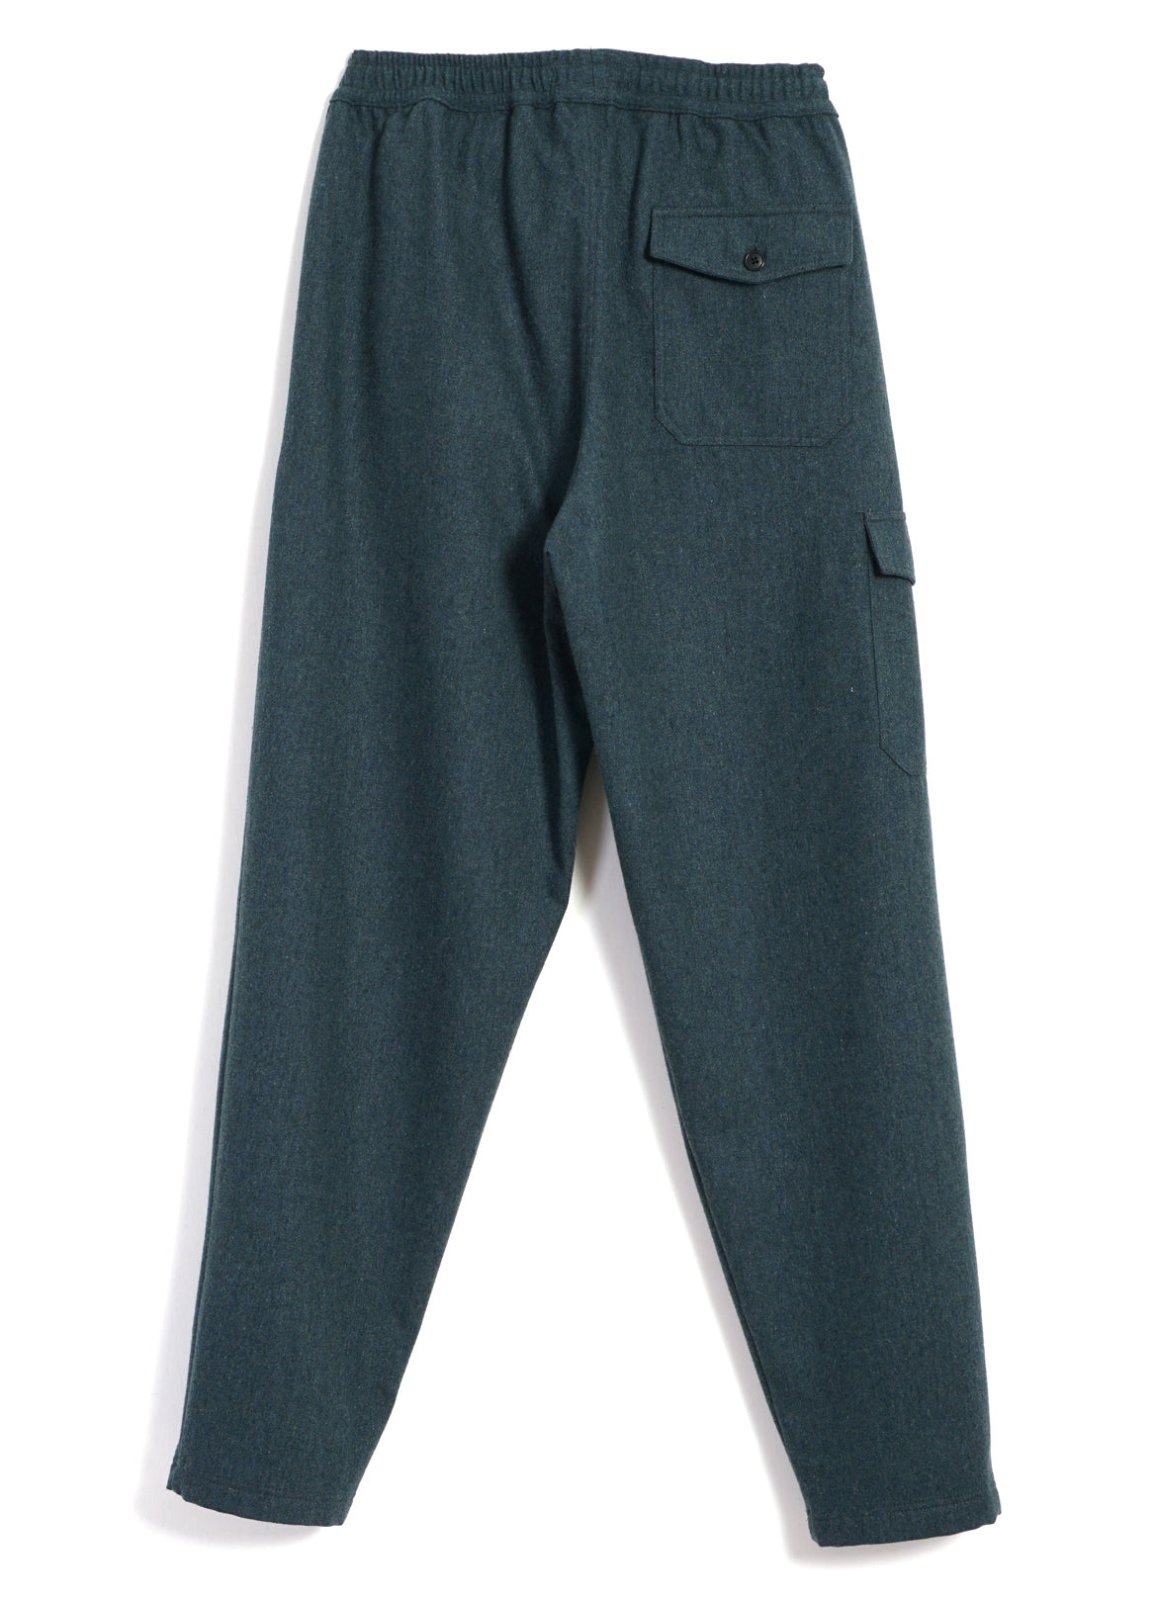 HANSEN GARMENTS - JIMMY | Casual Cargo Drawstring Pants | Moss Green - HANSEN Garments